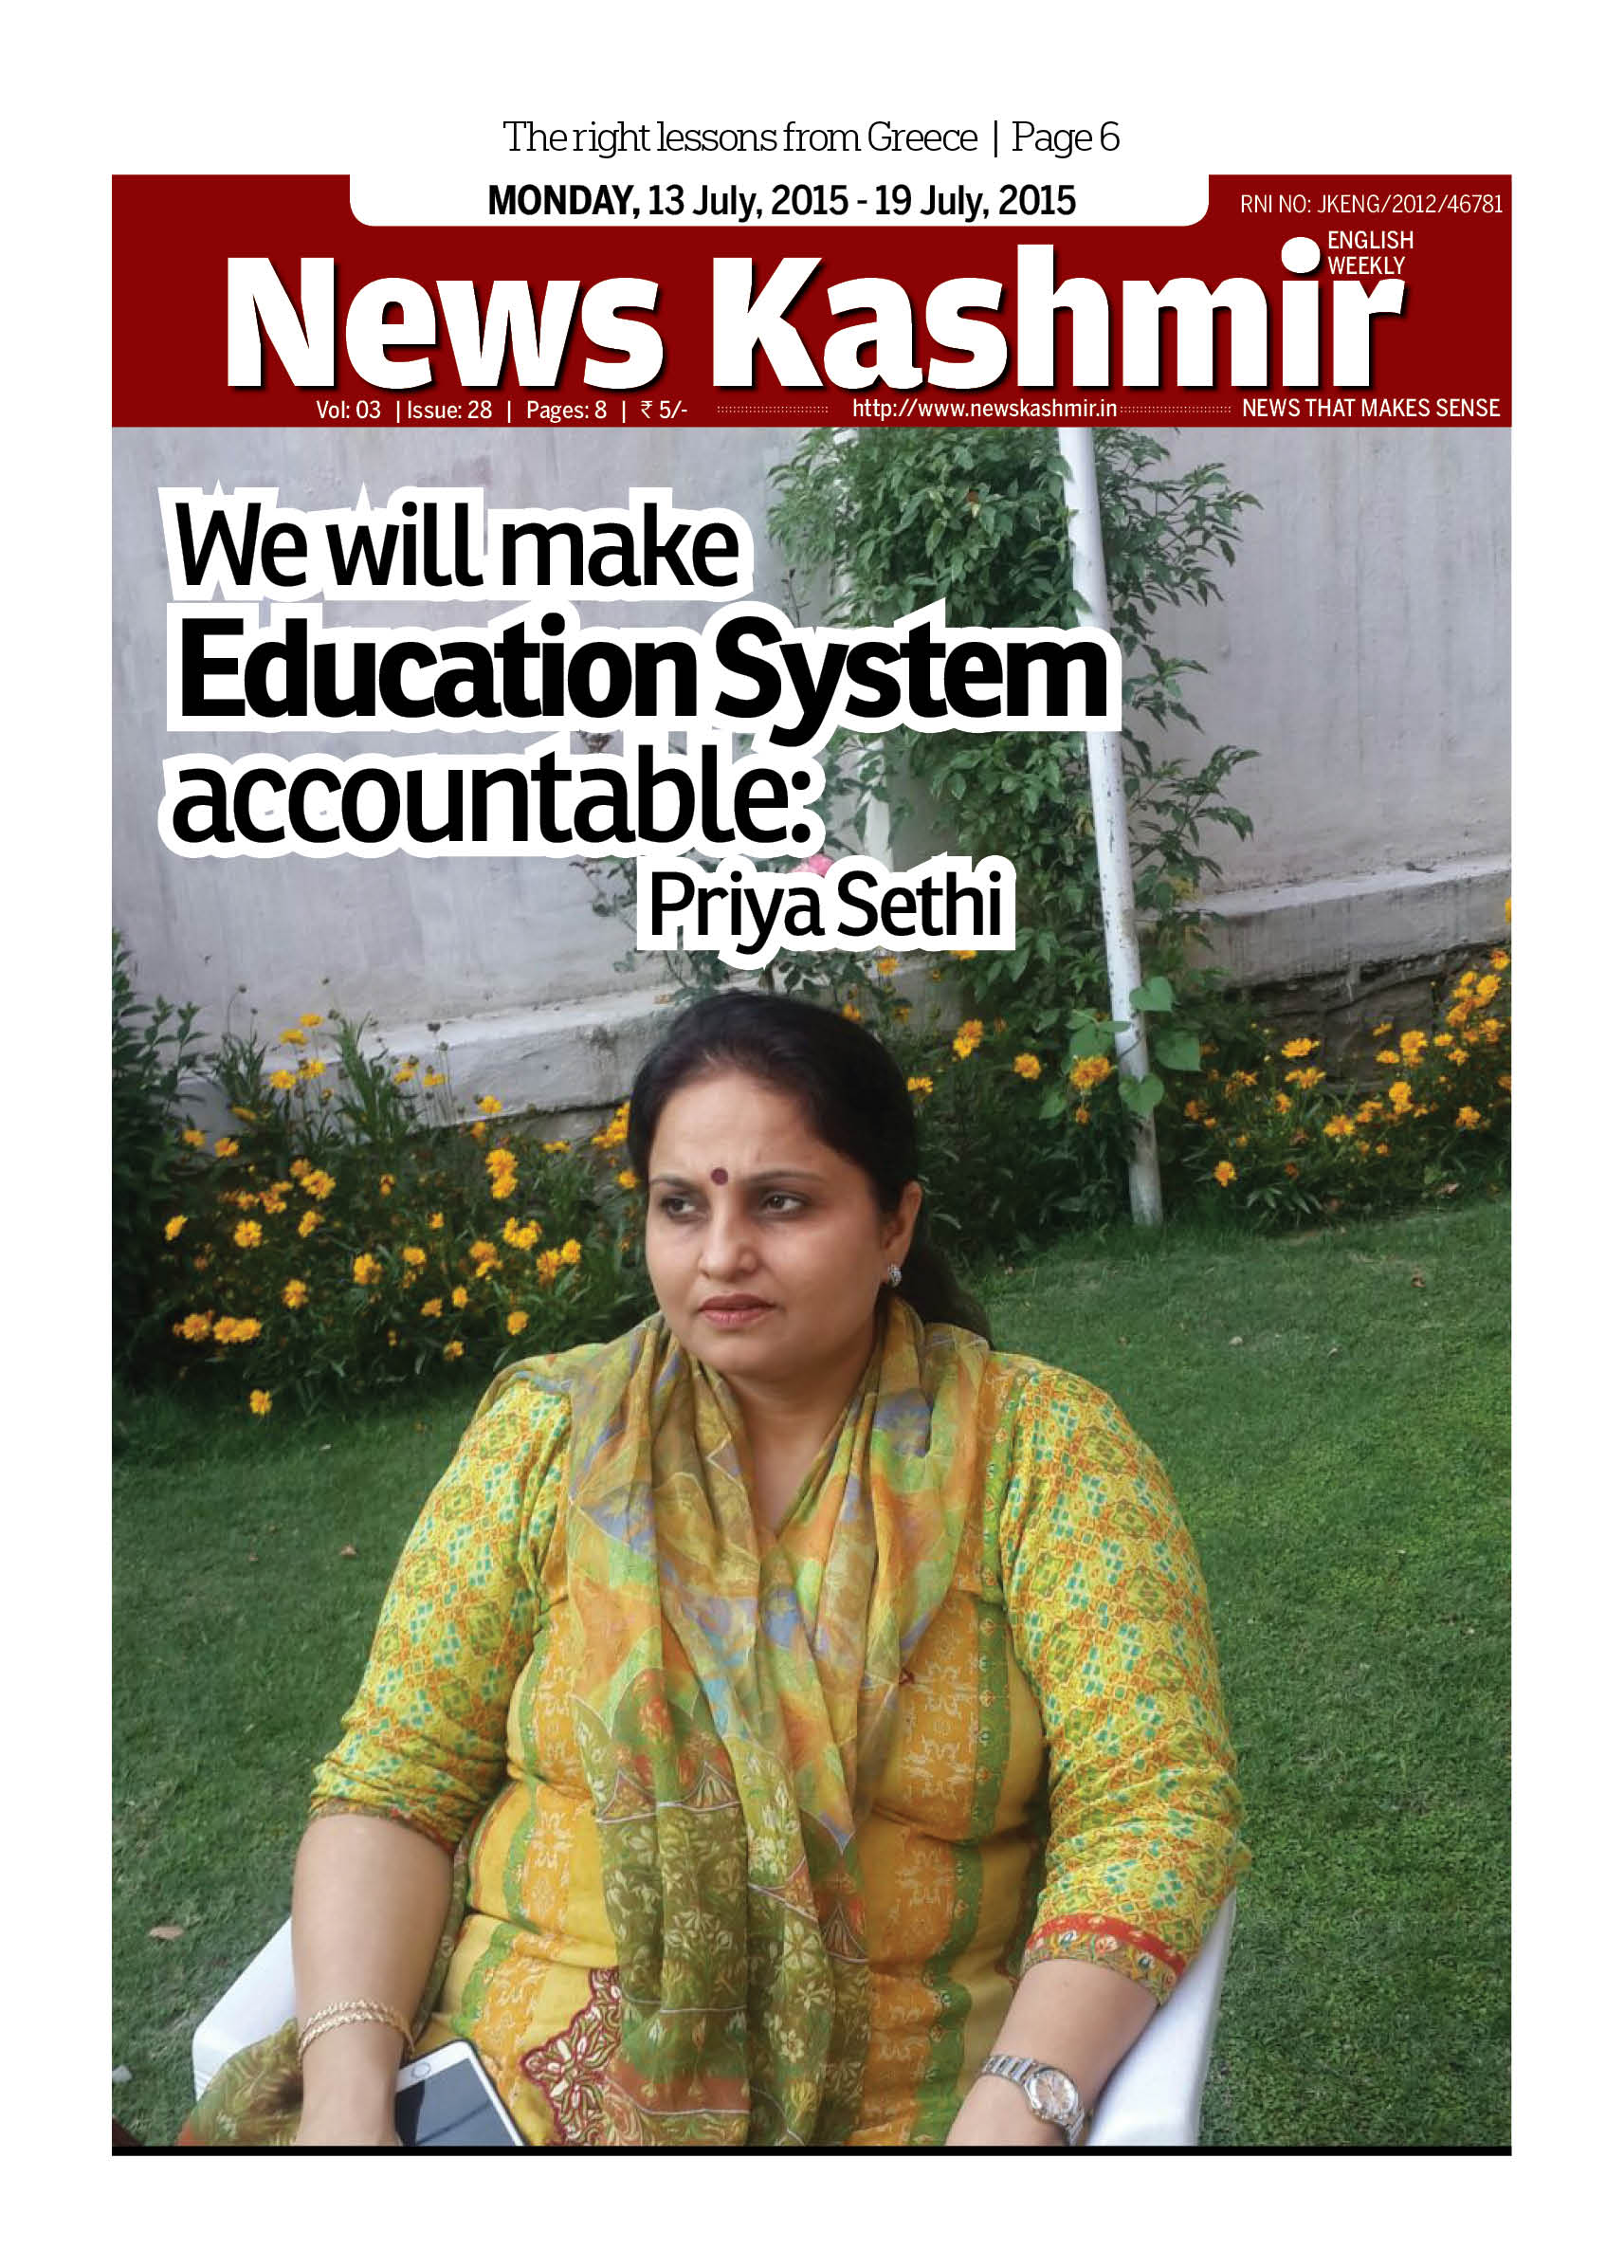 We will make Education System accountable: Priya Sethi